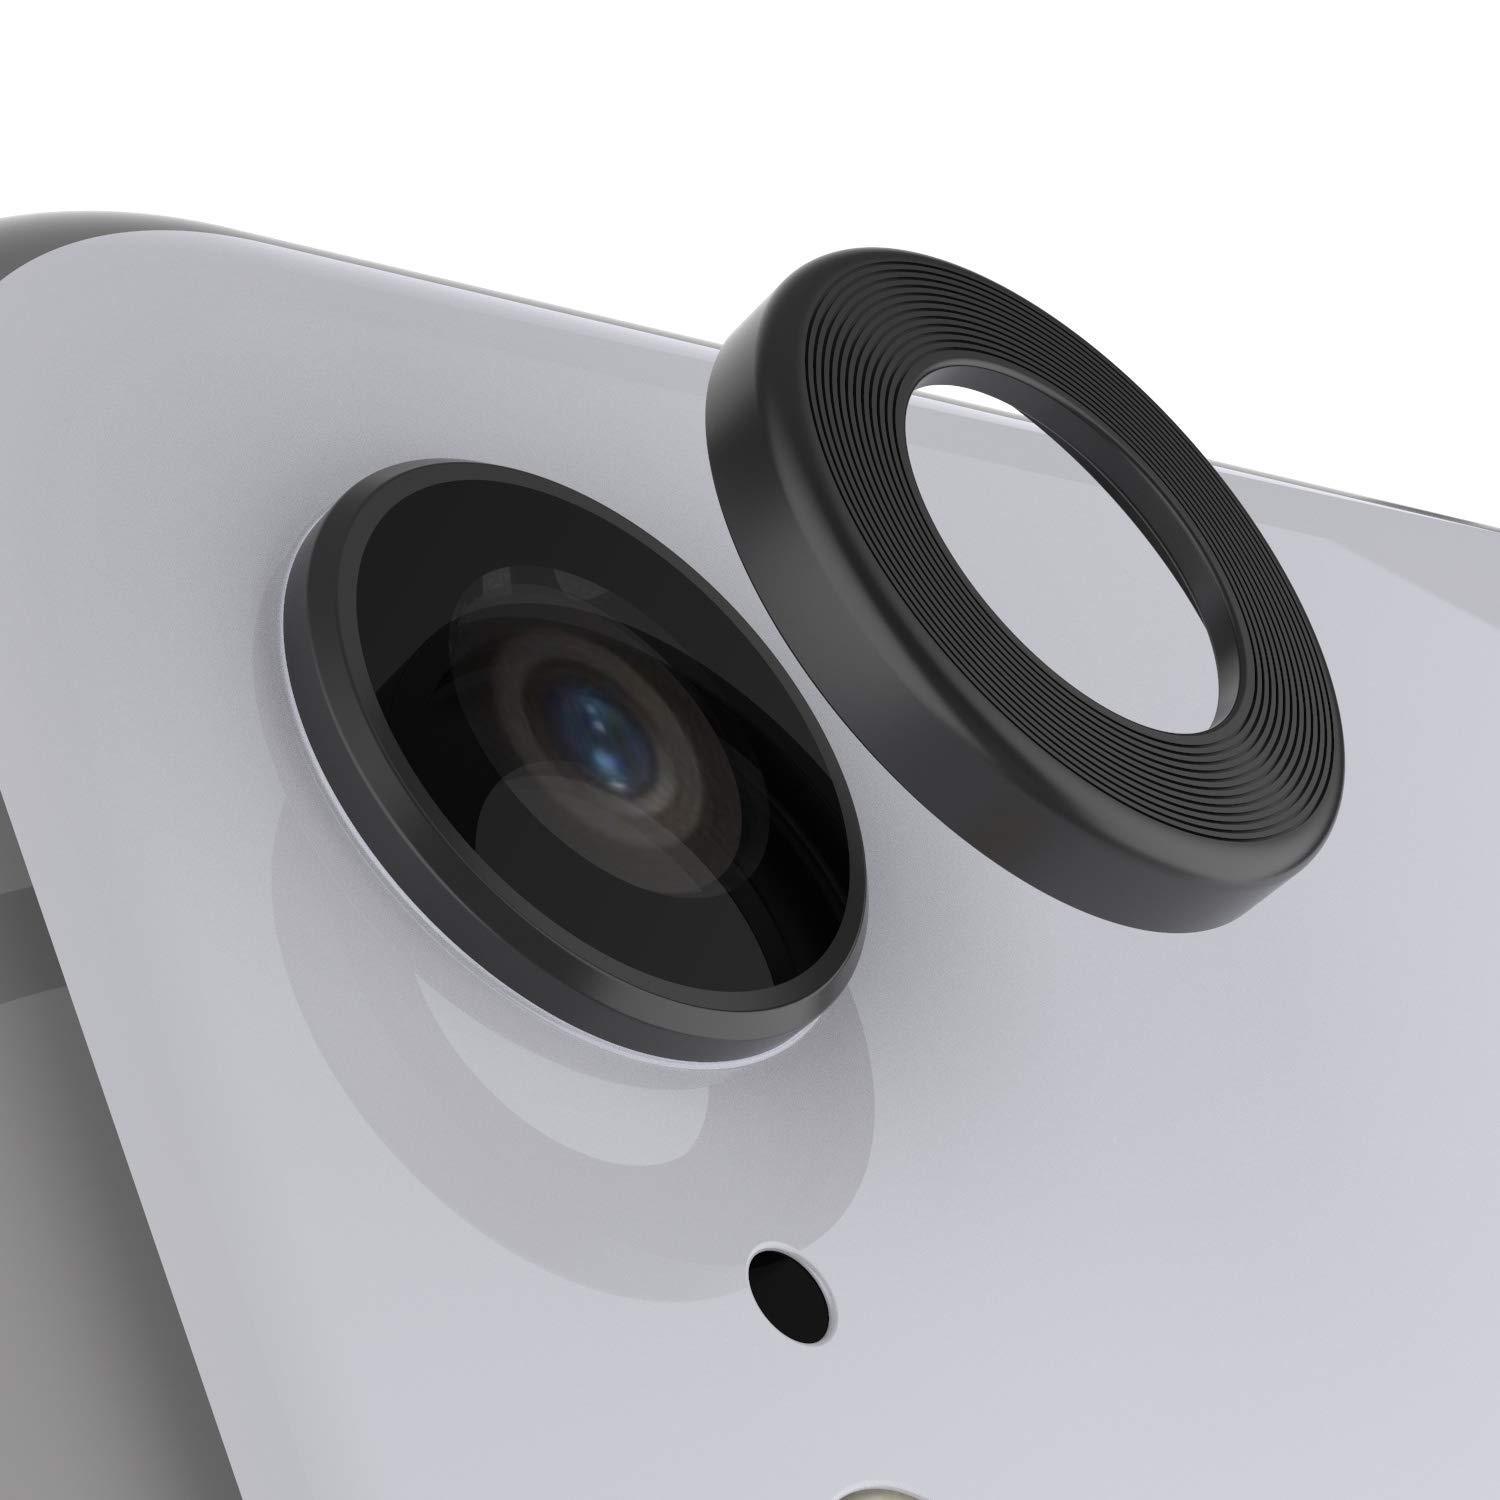 Punkcase iPhone 11 Pro Camera Protector Ring [Black]